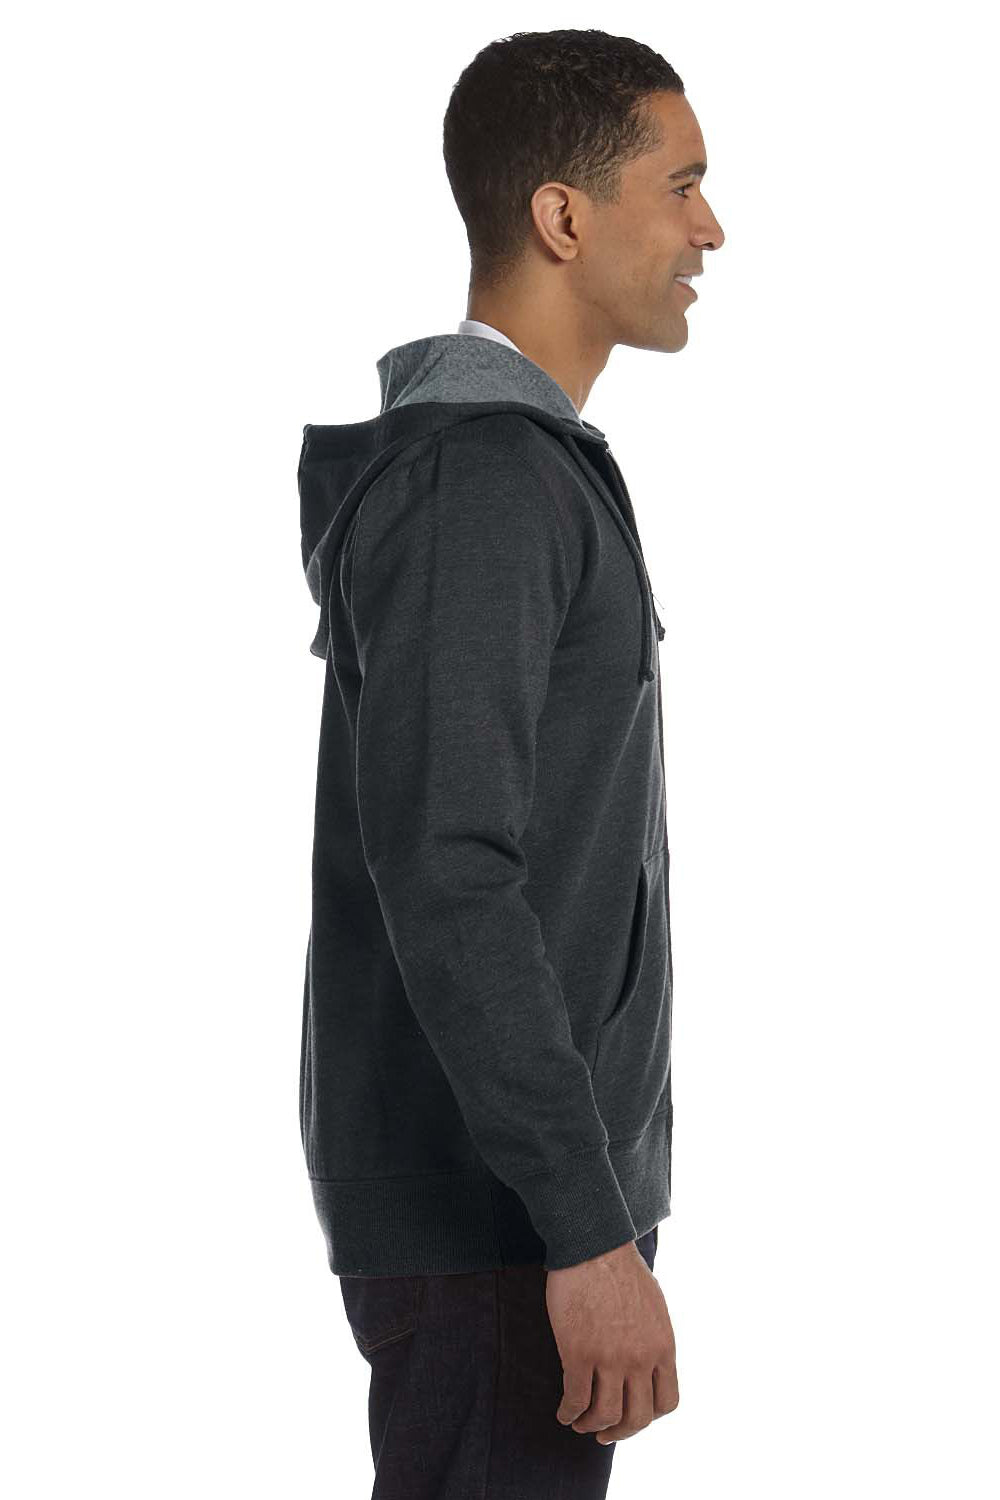 Econscious EC5680 Mens Heathered Fleece Full Zip Hooded Sweatshirt Hoodie Charcoal Grey Side